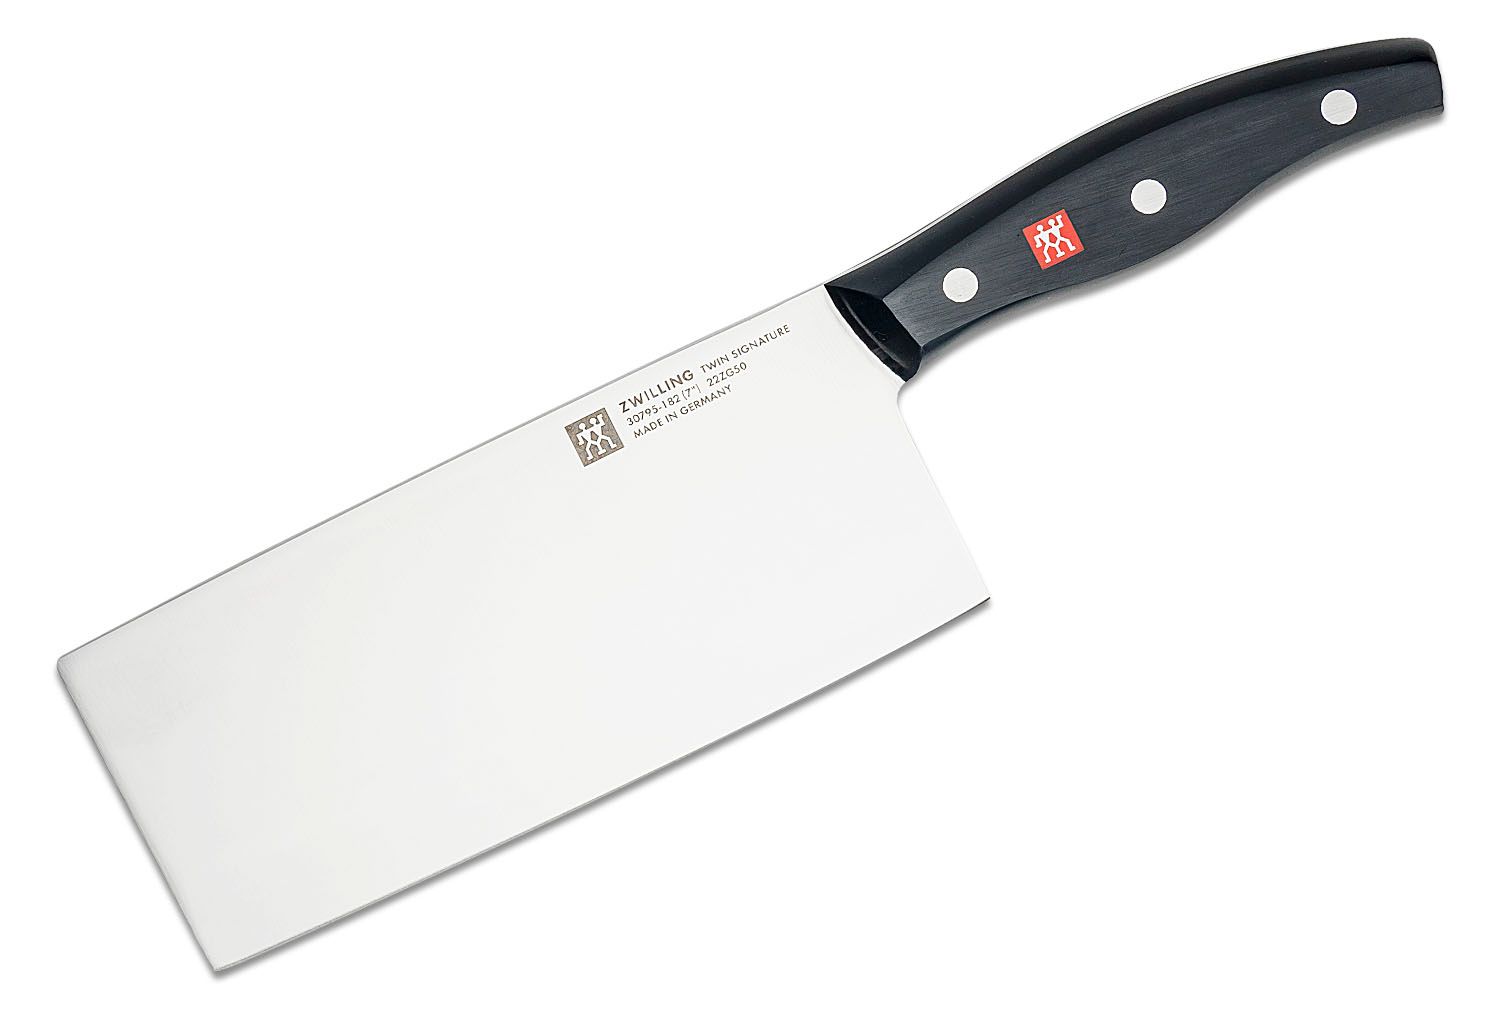 Zwilling vegetable knife set, 3-pcs, 38115-001  Advantageously shopping at